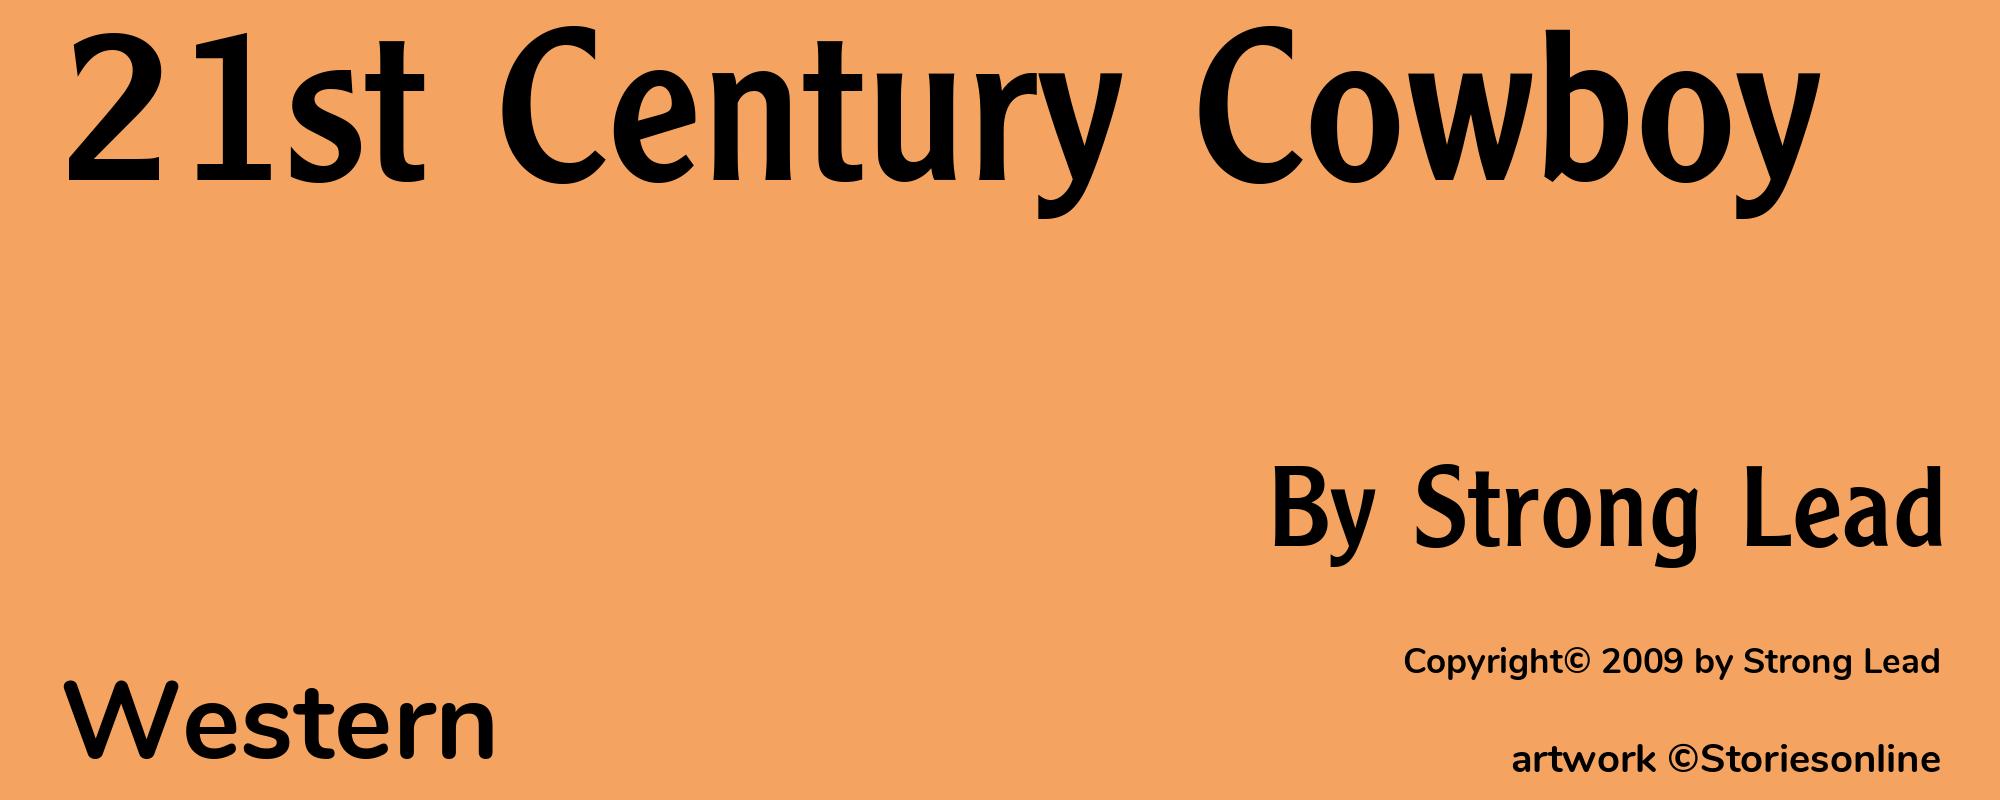 21st Century Cowboy - Cover